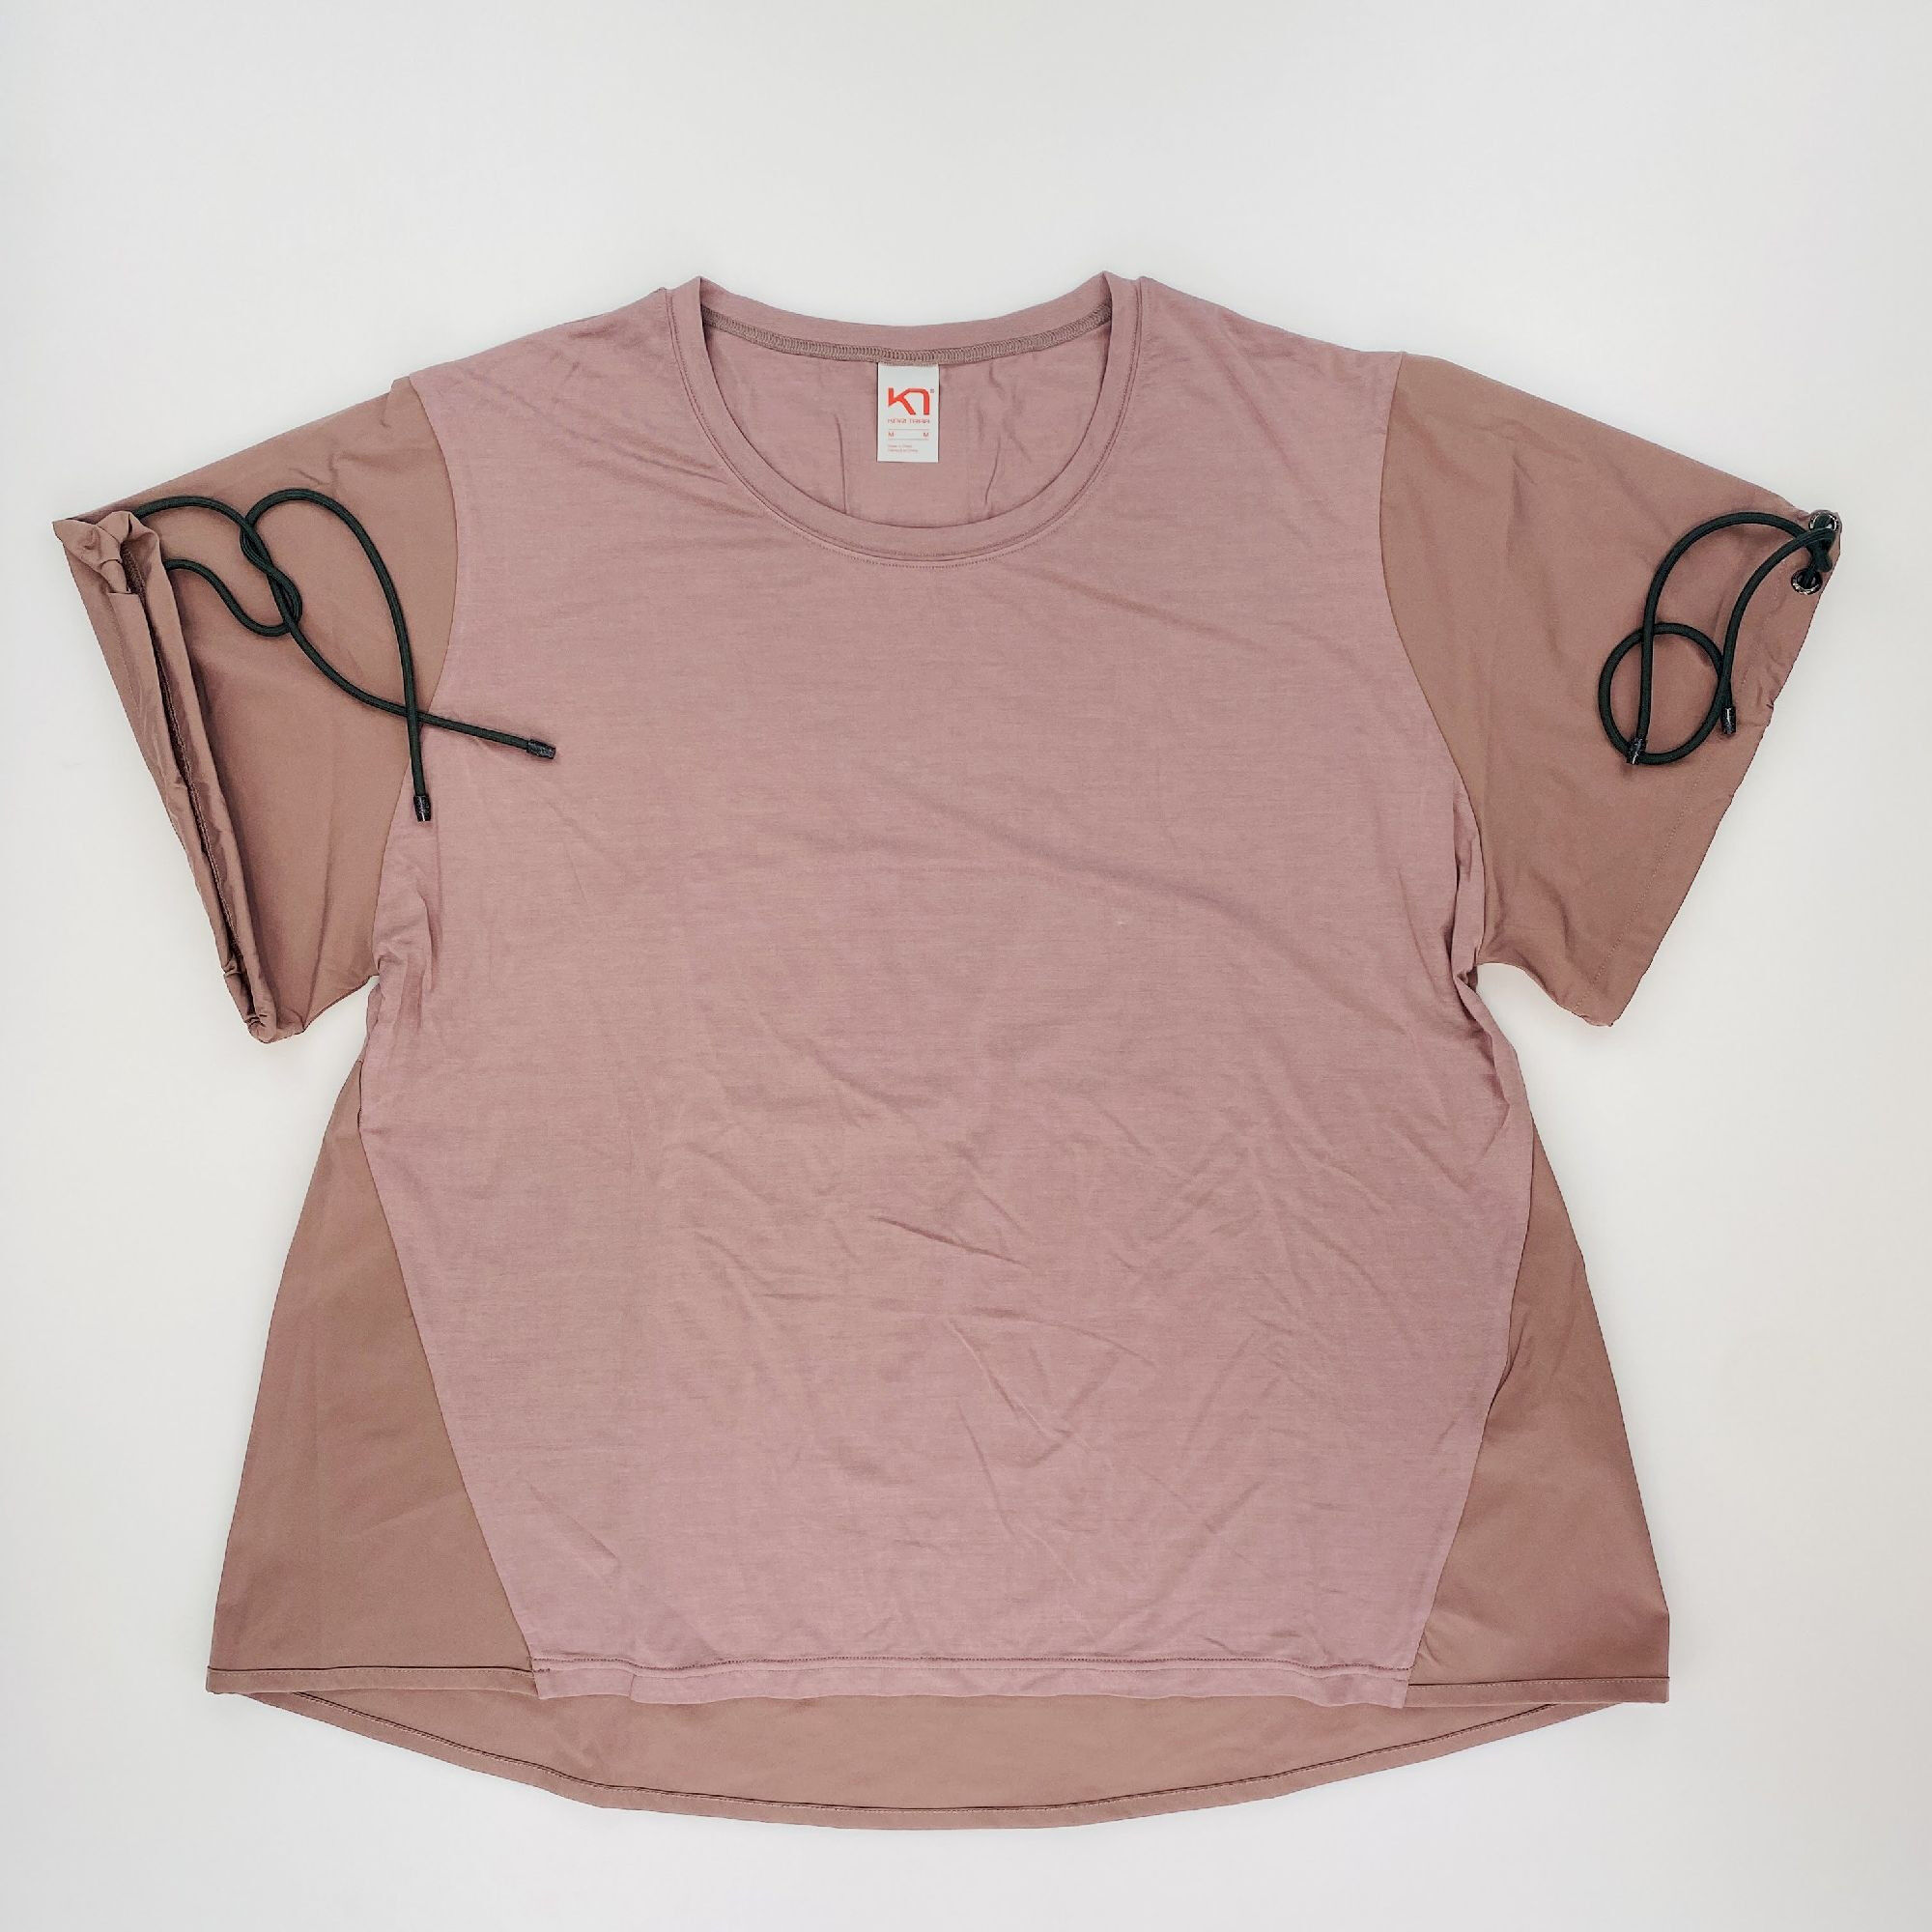 Kari Traa Voss Tee - T-shirt di seconda mano - Donna - Marrone - M | Hardloop